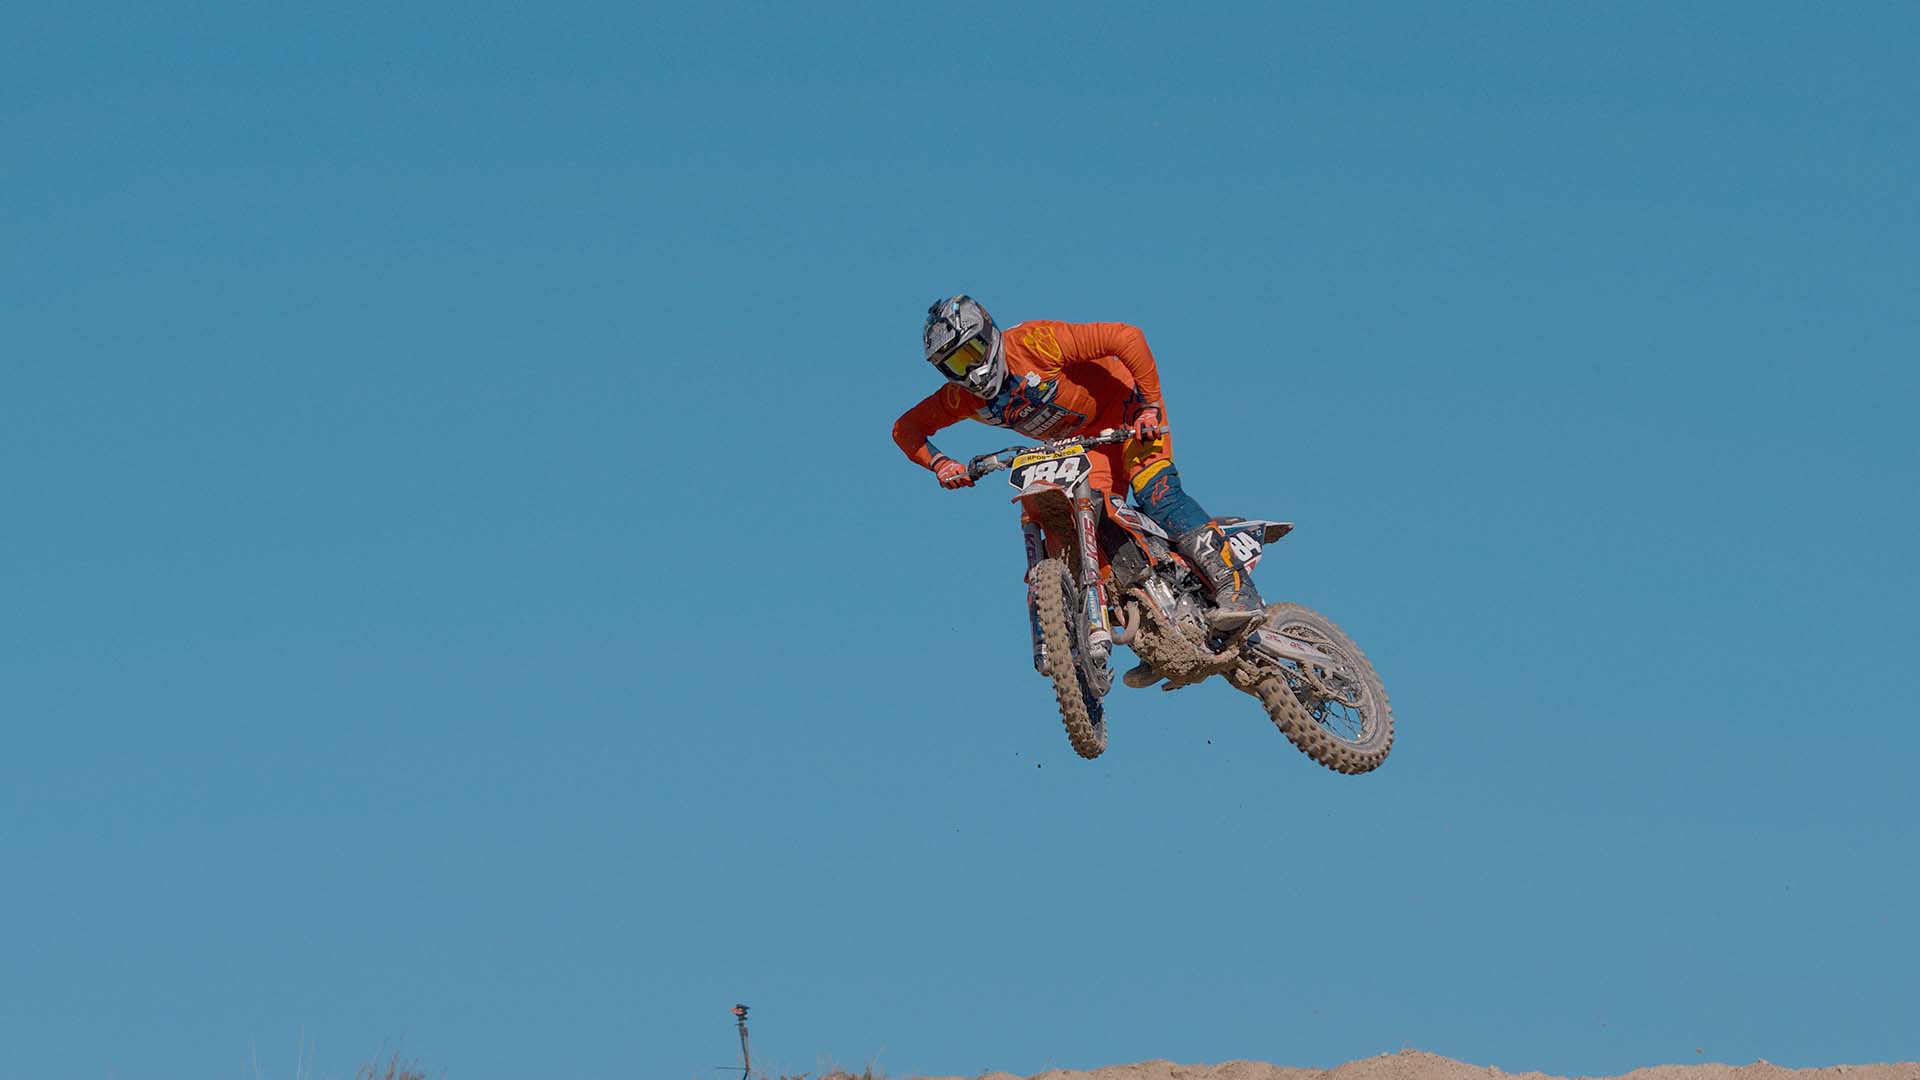 Motocross rider, Jamie Carpenter, takes flight. Image: Anton Nelson.